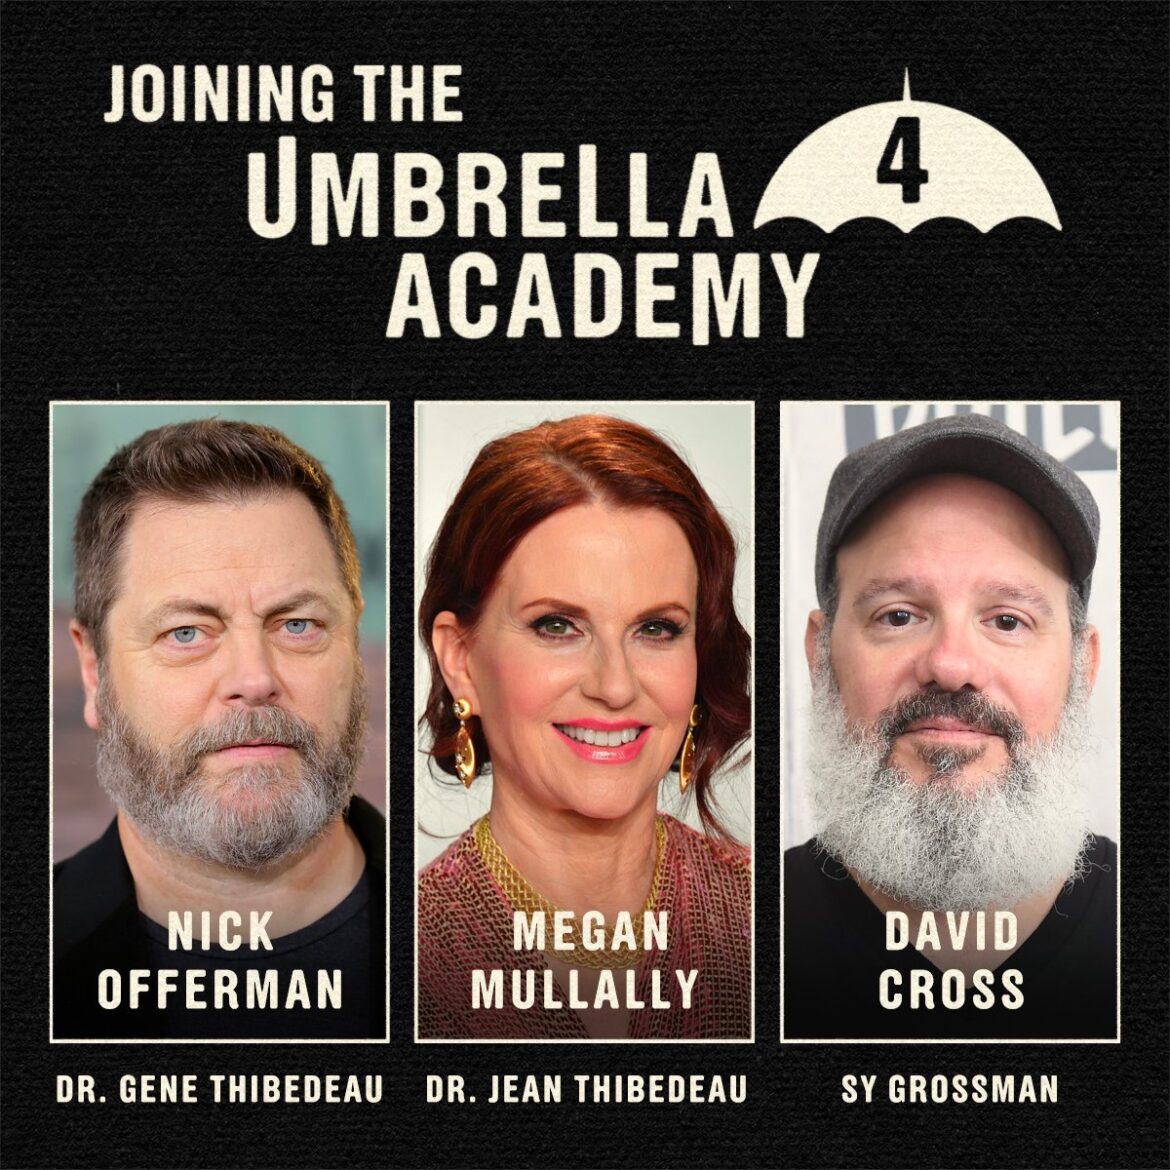 Nick Offerman, Megan Mullally and David Cross Joins The Umbrella Academy Season 4 Cast